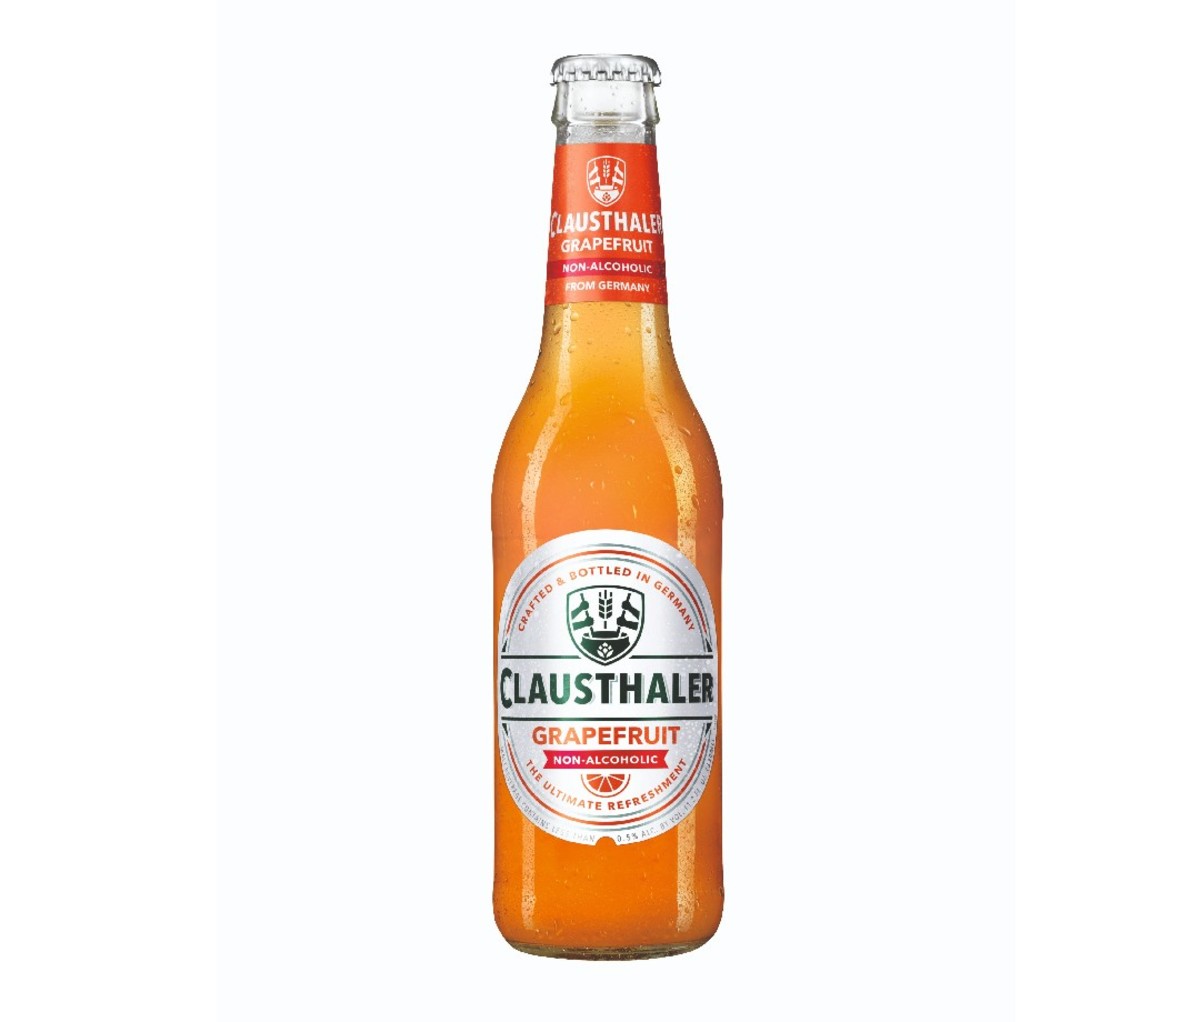 Bottle of Clausthaler Grapefruit nonalcoholic beer